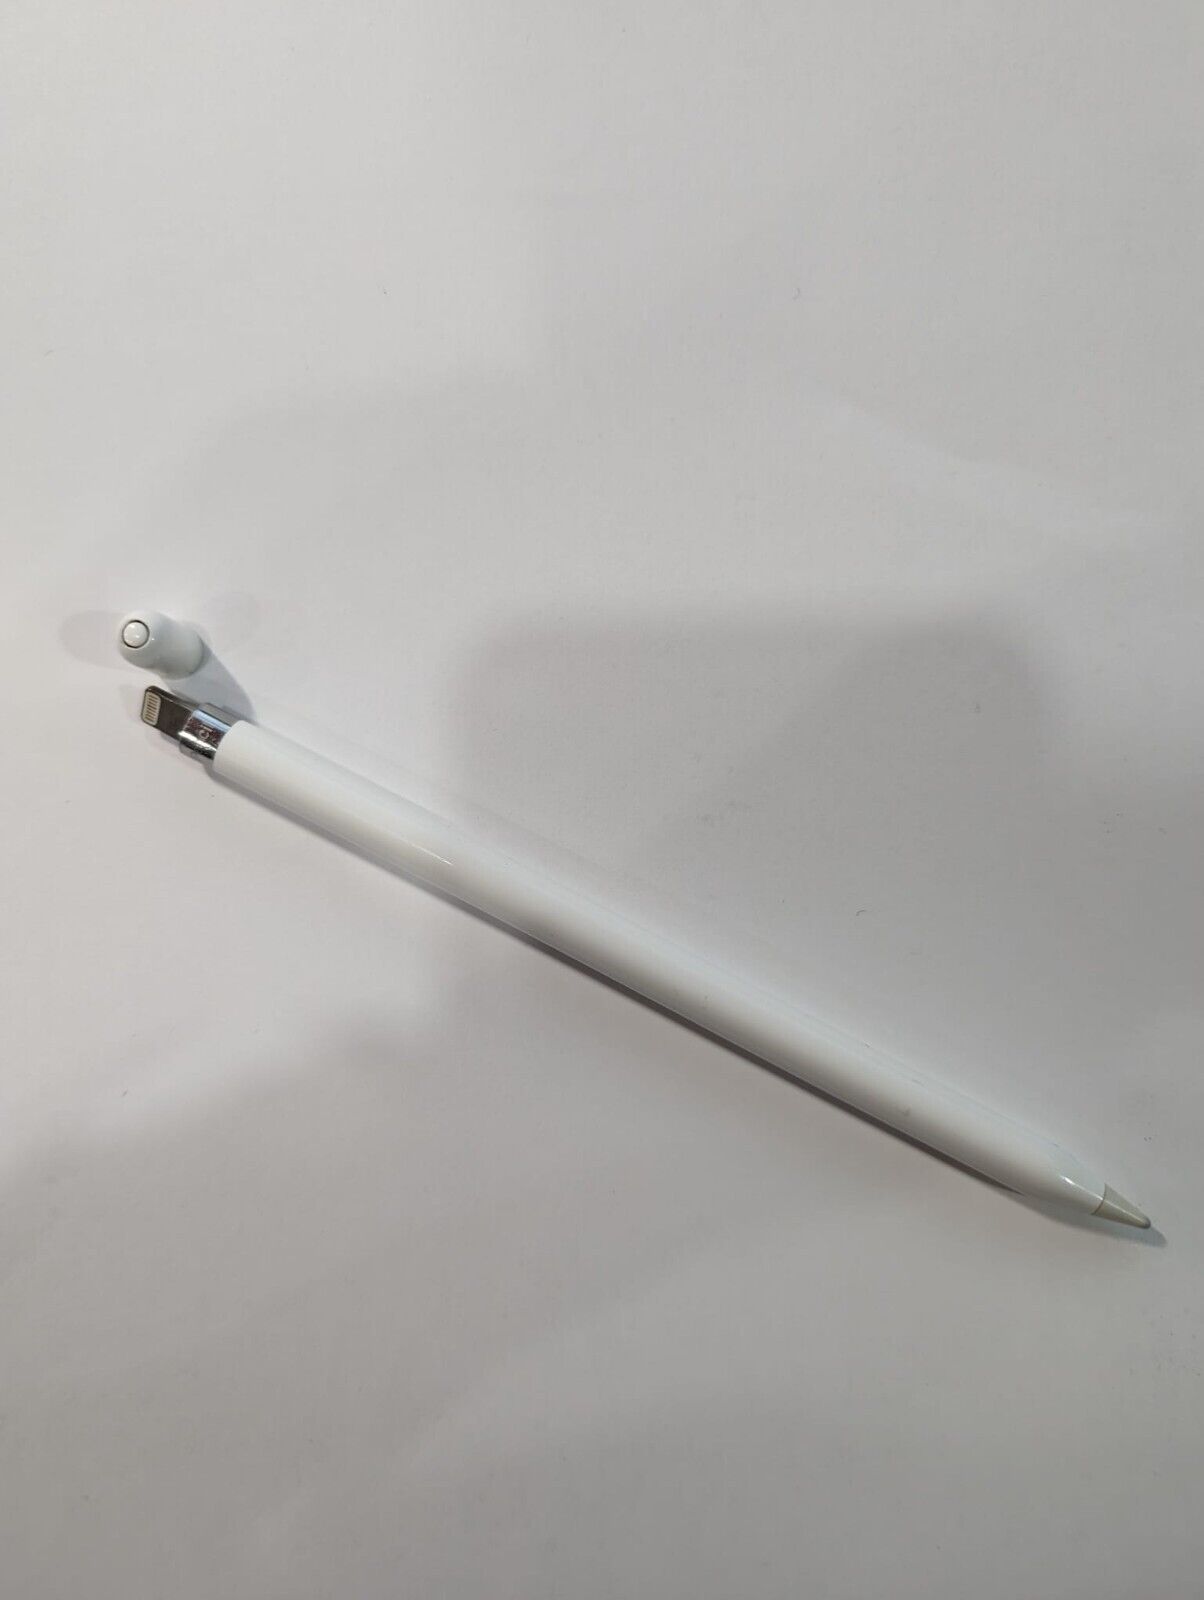 Apple Pencil A1603 for iPad Pro & iPad, MK0C2AM/A OEM Original Genuine Authentic